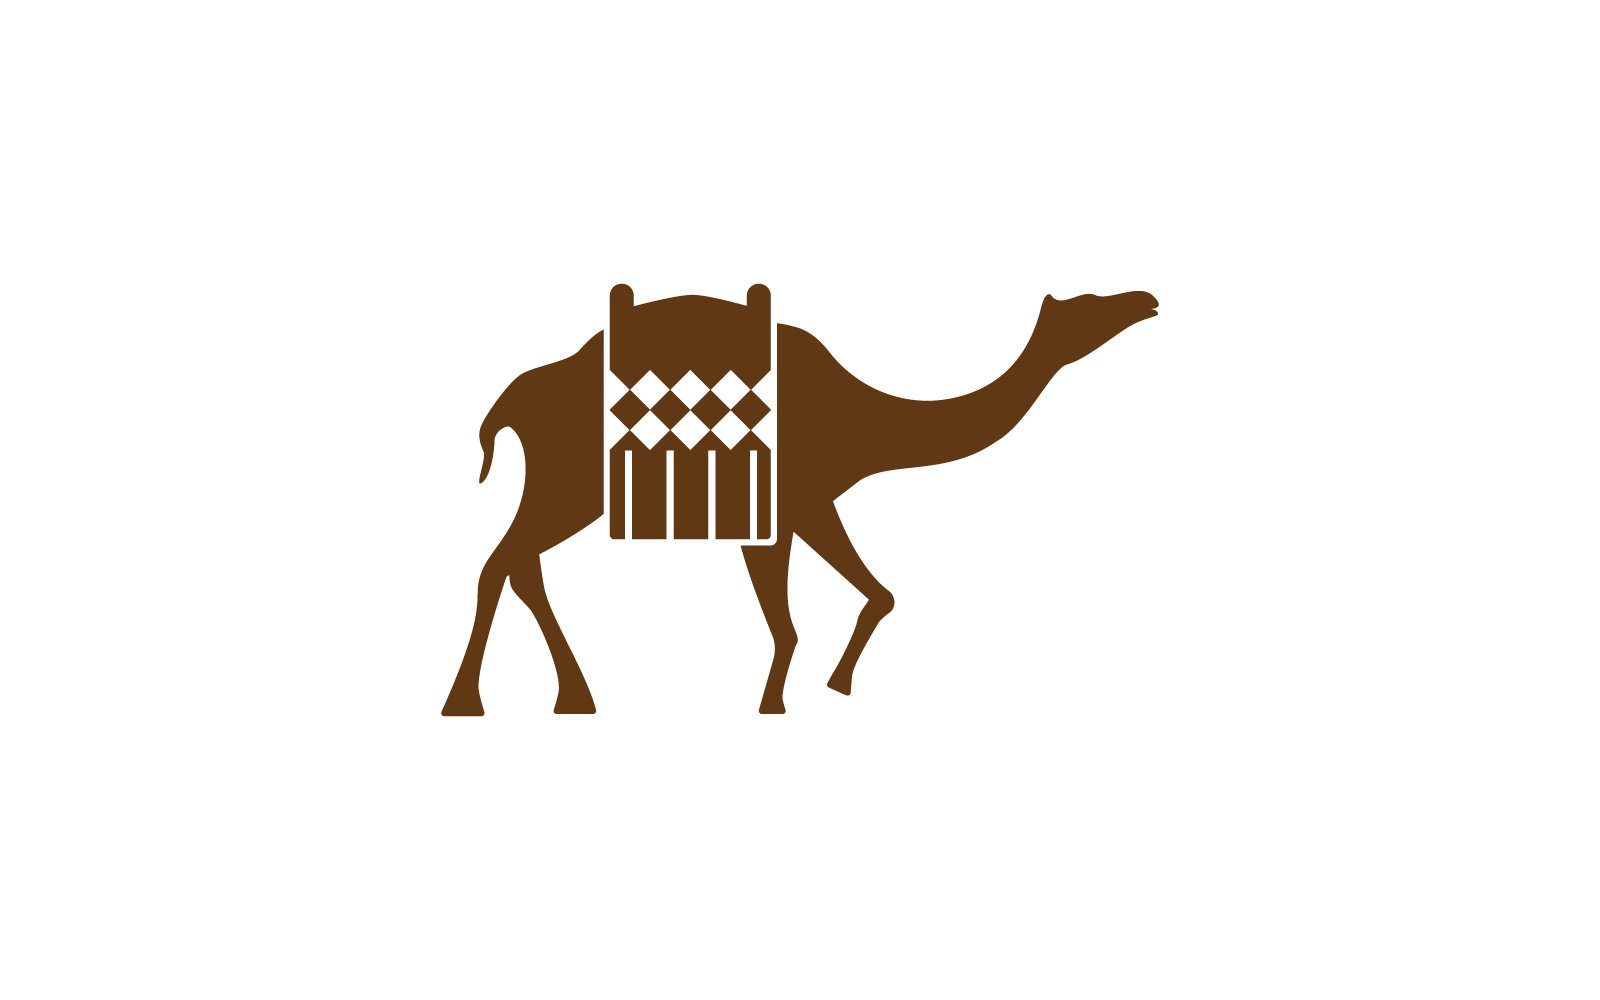 Camel illustration logo icon vector design